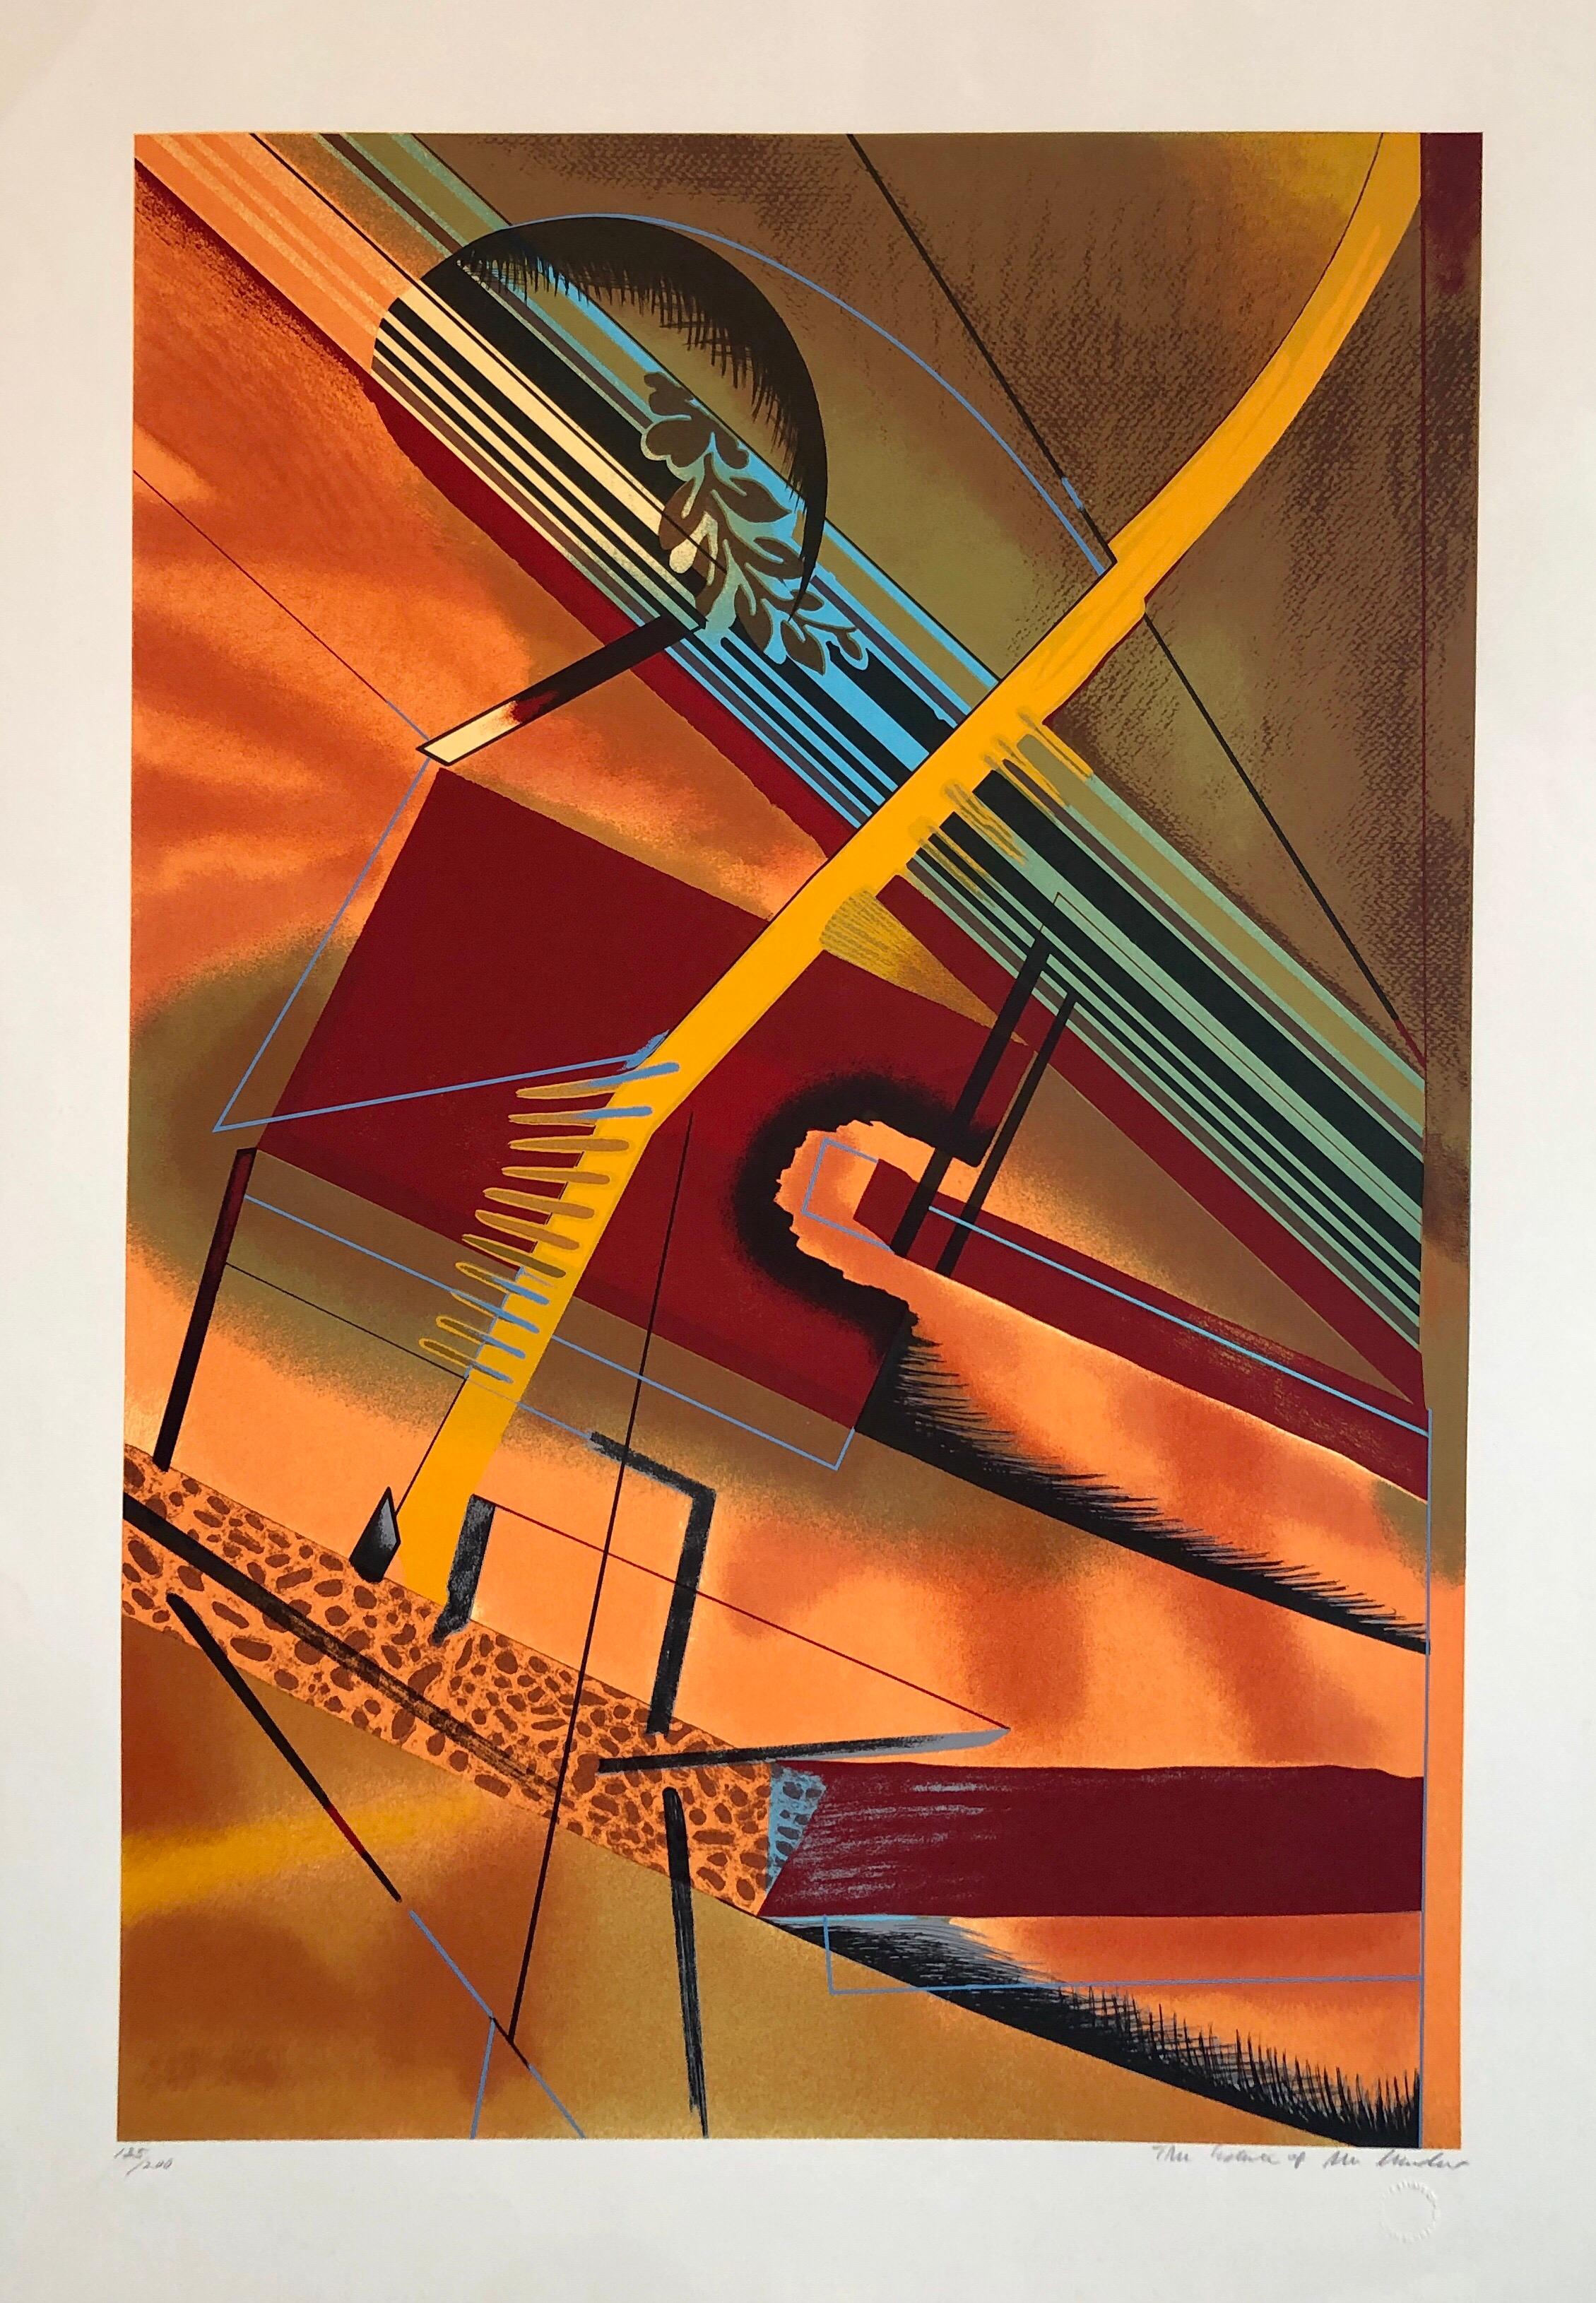 William Schwedler Abstract Print - Surrealist Architectural Landscape Silkscreen 1970s Chicago Modernist Lithograph